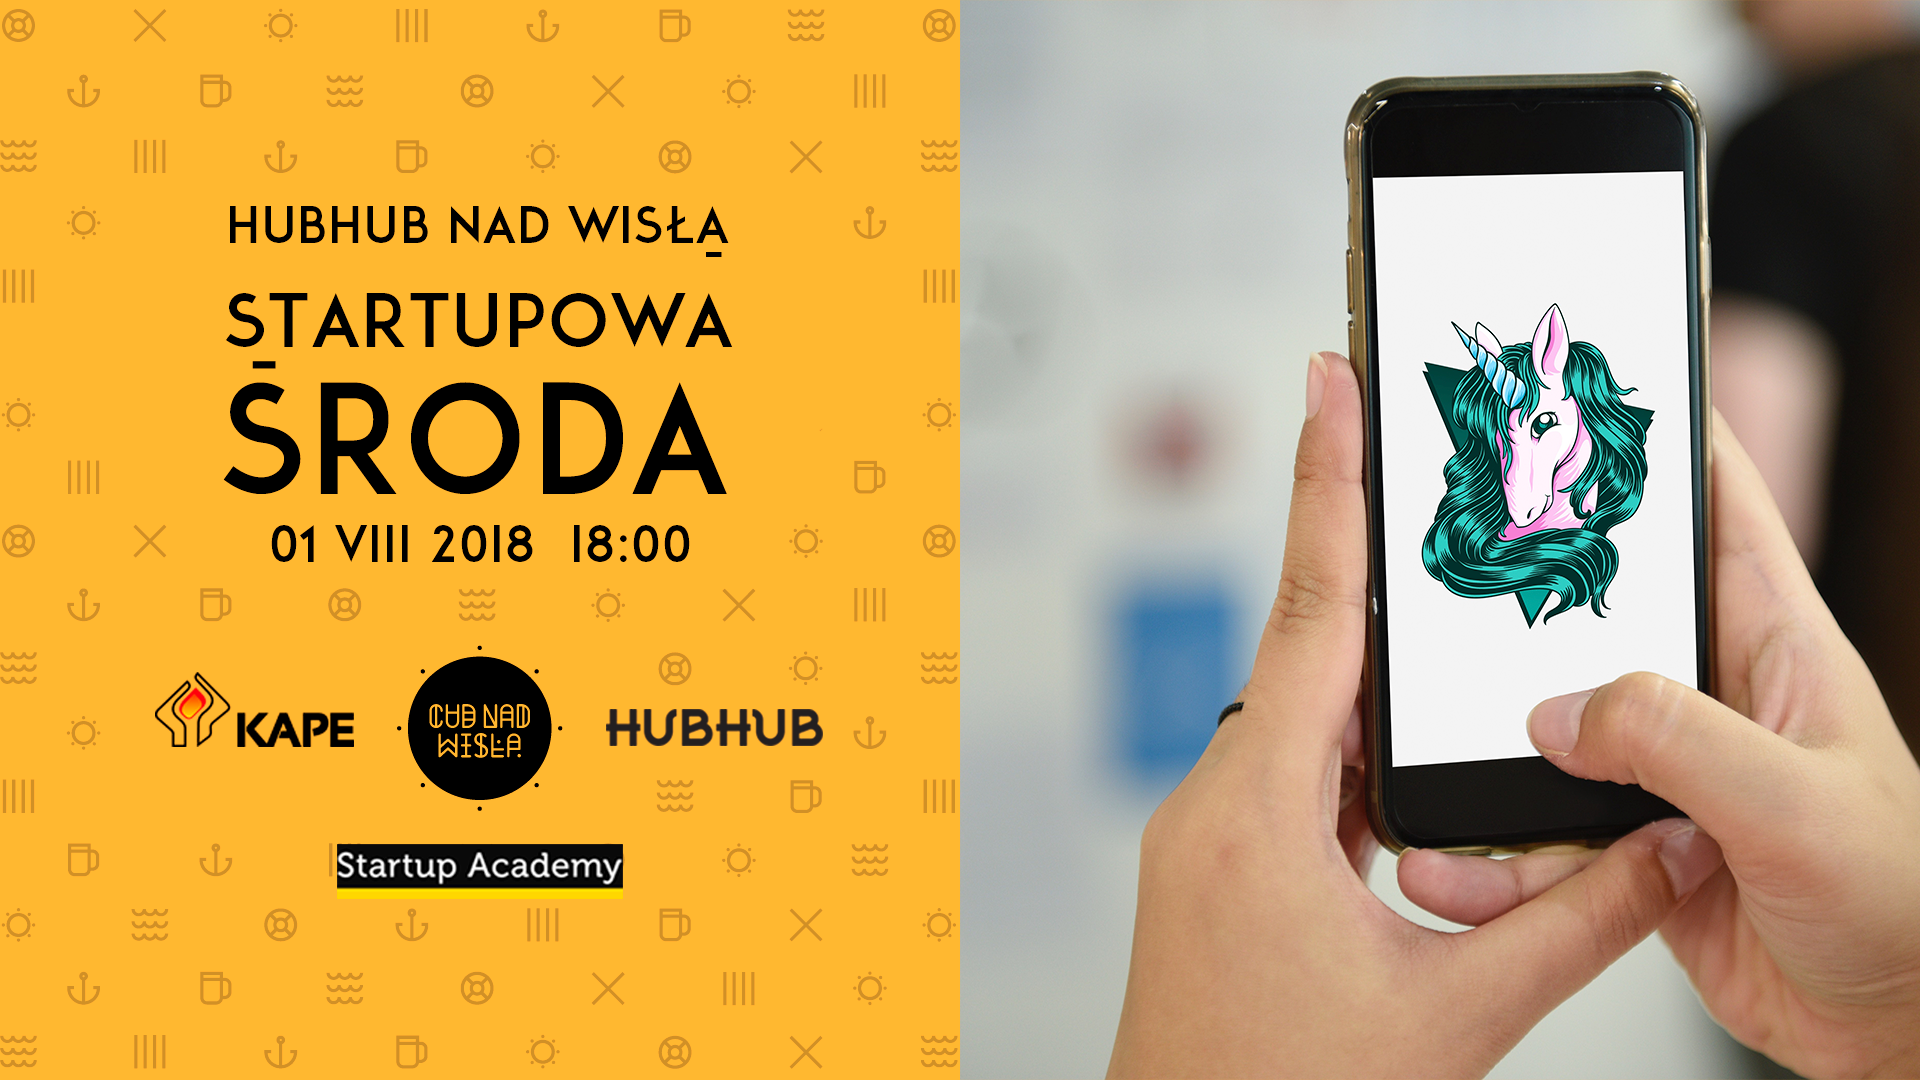 hubhub-nad-wisla-startupowa-sroda-sierpien-2018